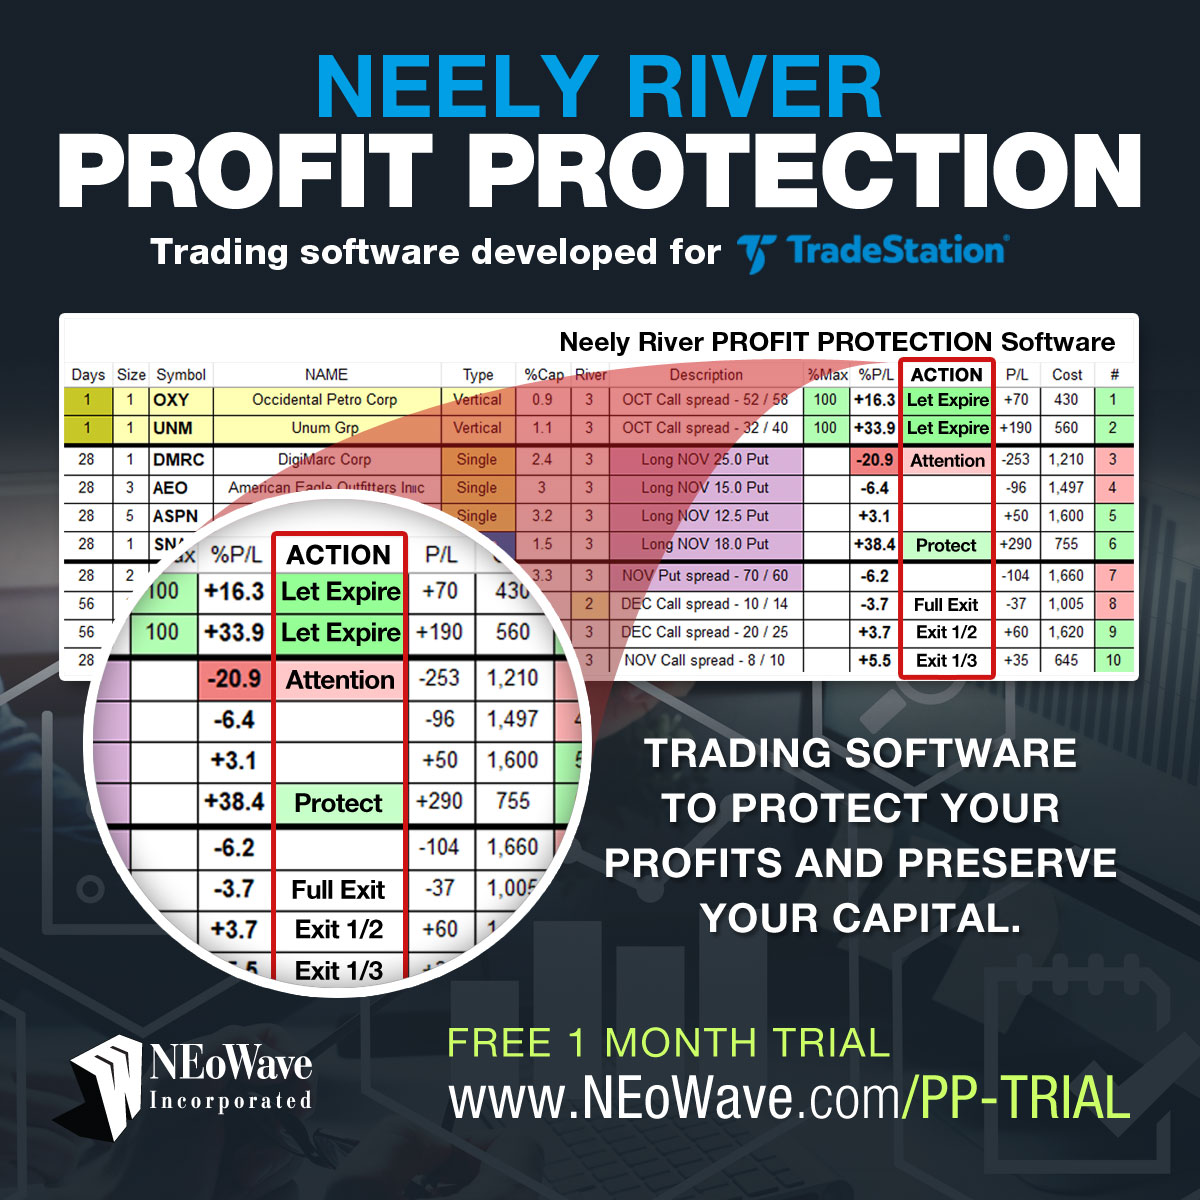 Glenn Neely's Neely River Profit Protection Software